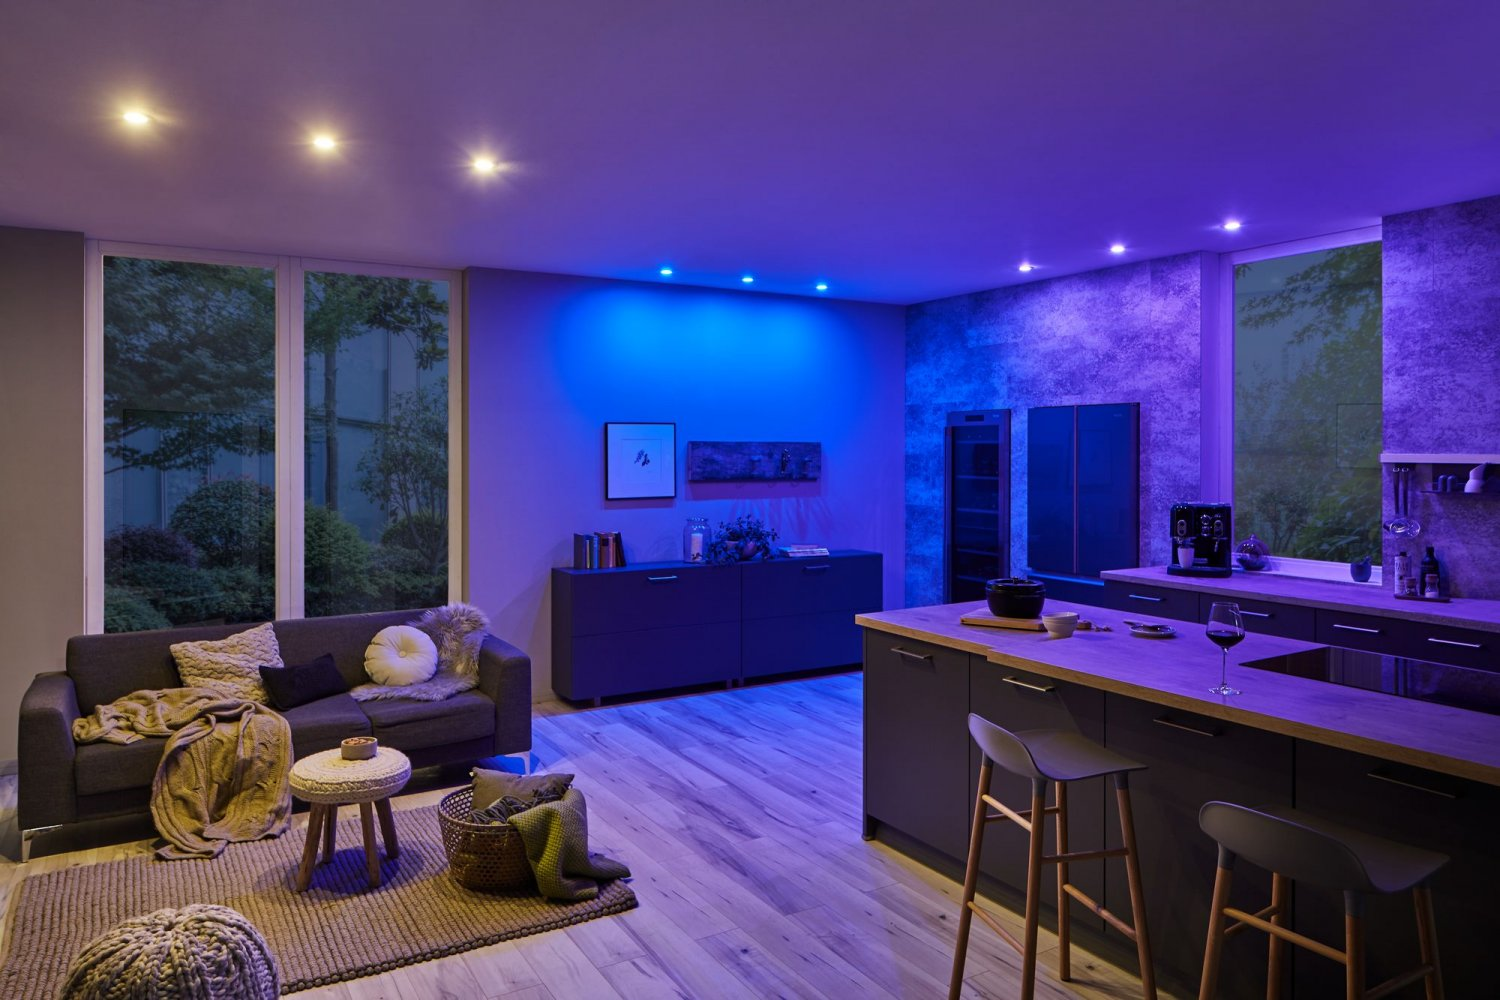 Nova Farbwechsel Einbauleuchte Home Zigbee LED Smart RGBW Plus PAULMANN LICHT